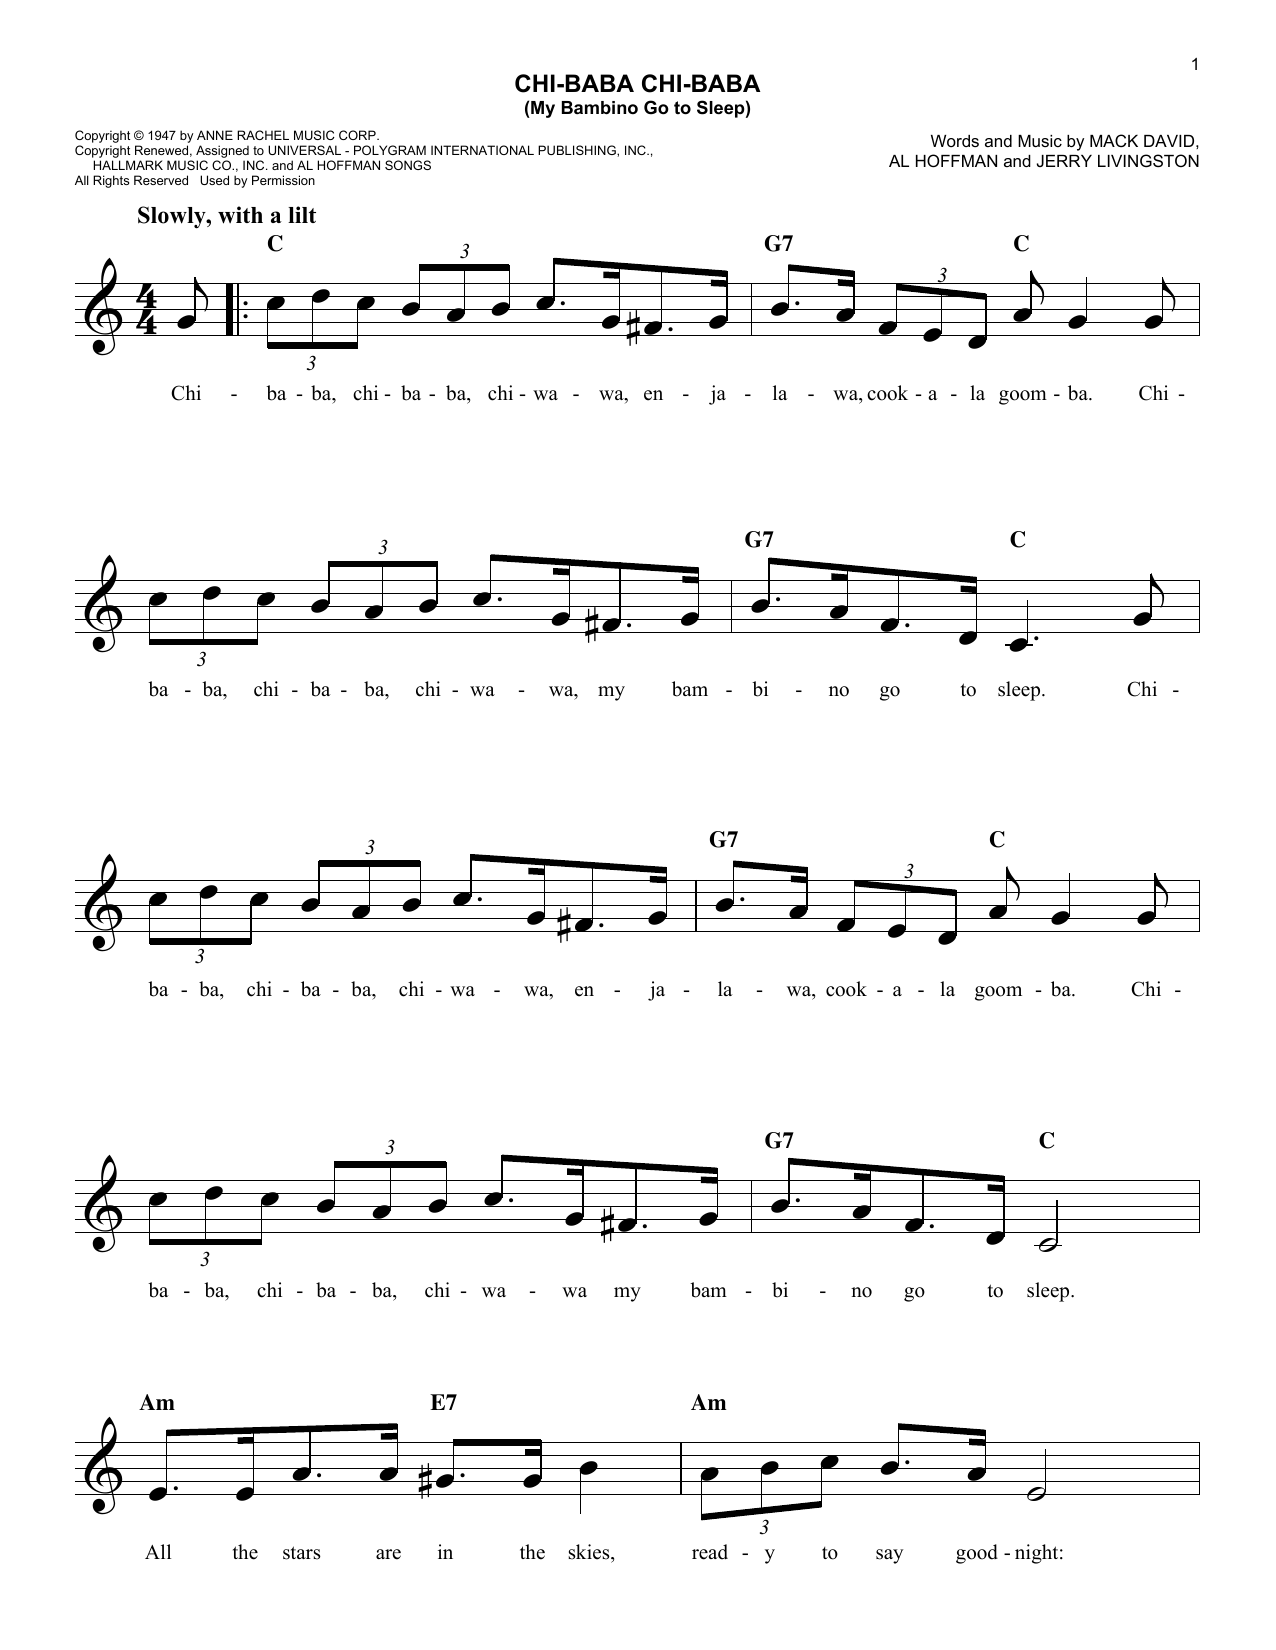 Mack David Chi-Baba Chi-Baba (My Bambino Go To Sleep) Sheet Music Notes & Chords for Melody Line, Lyrics & Chords - Download or Print PDF